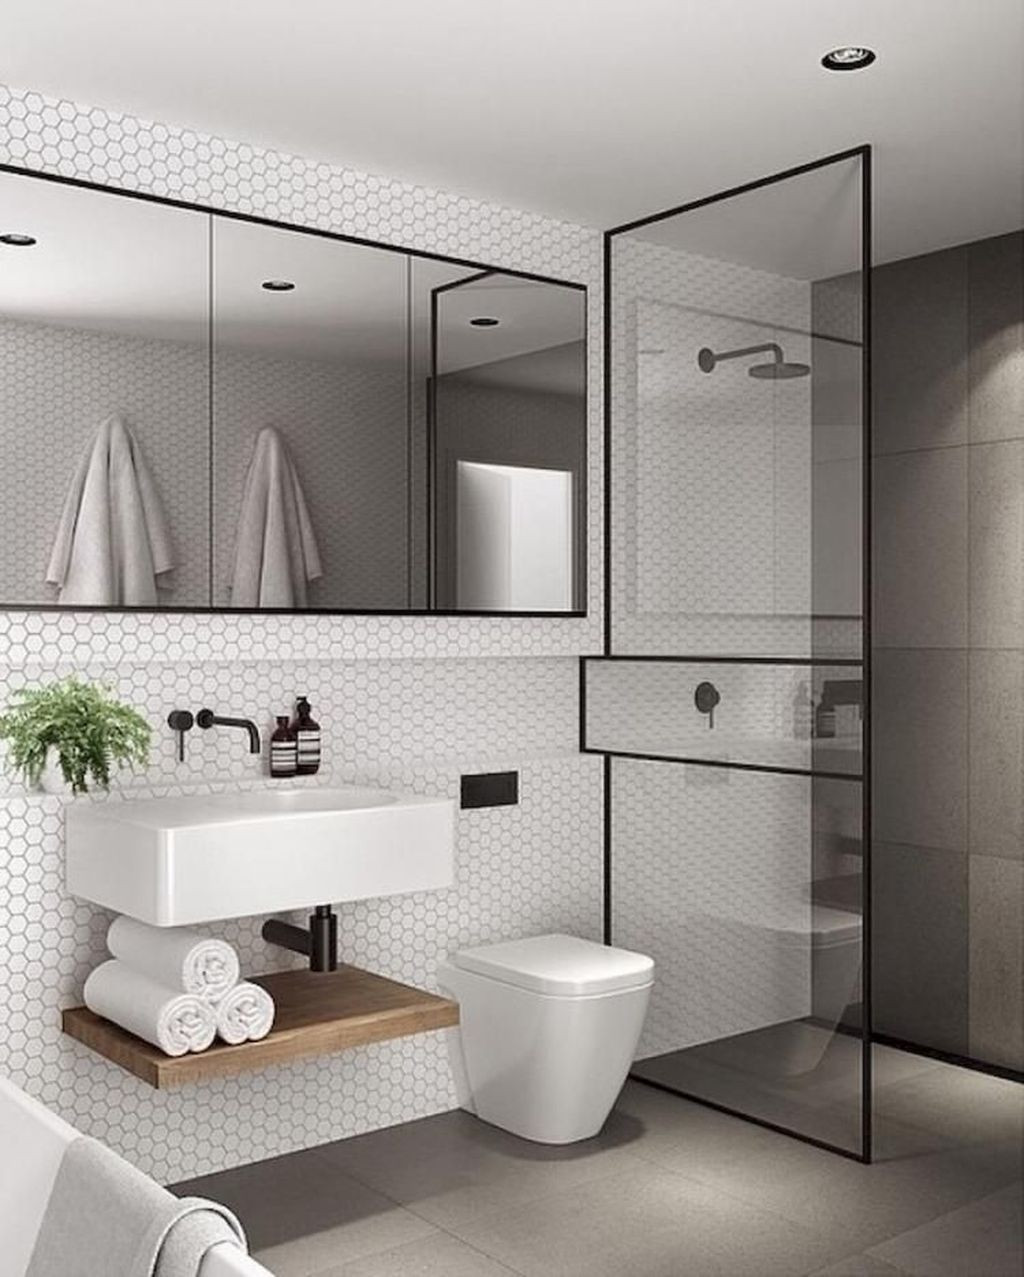 Small Master Bathroom Ideas
 41 Stylish Small Master Bathroom Remodel Design Ideas